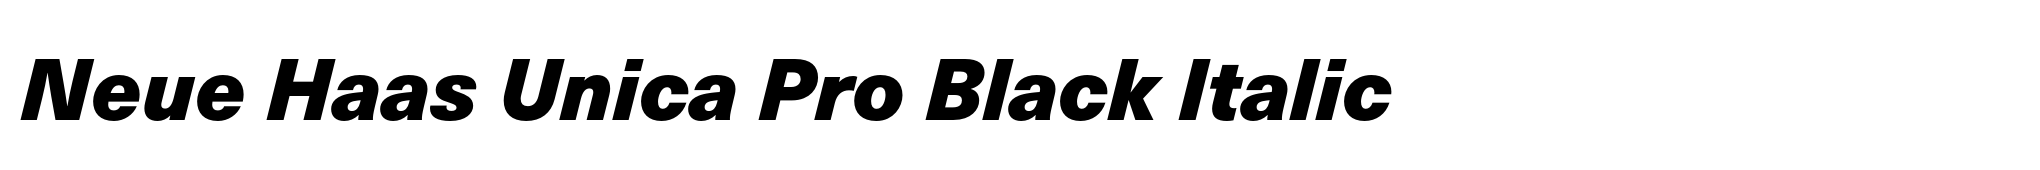 Neue Haas Unica Pro Black Italic image